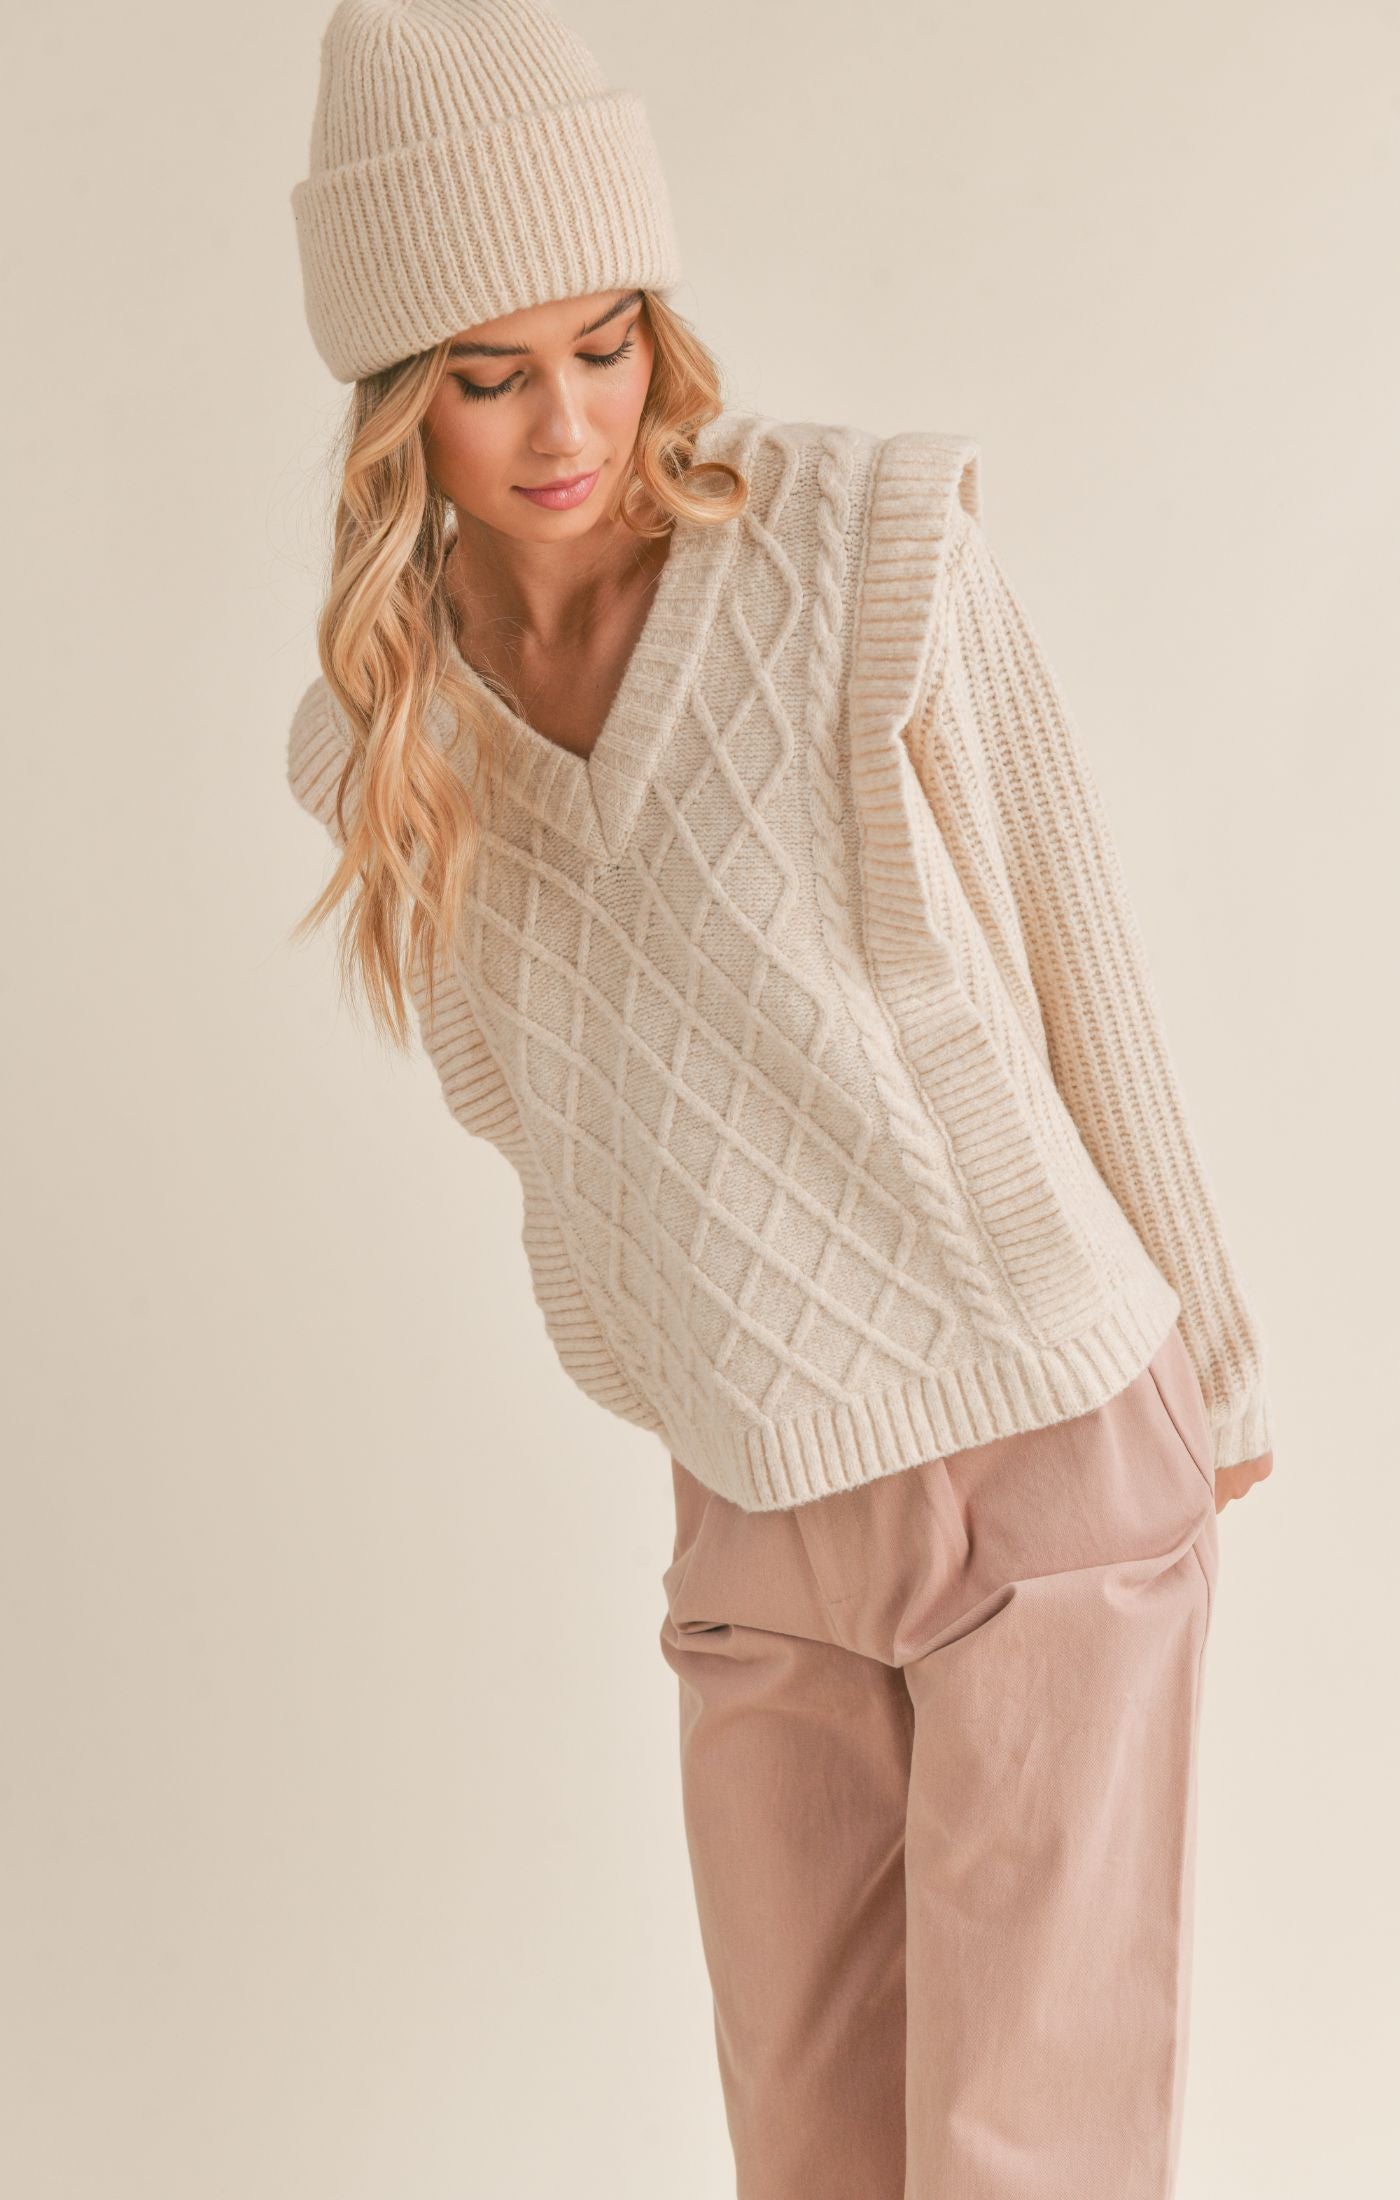 Janie Ruffle Sweater